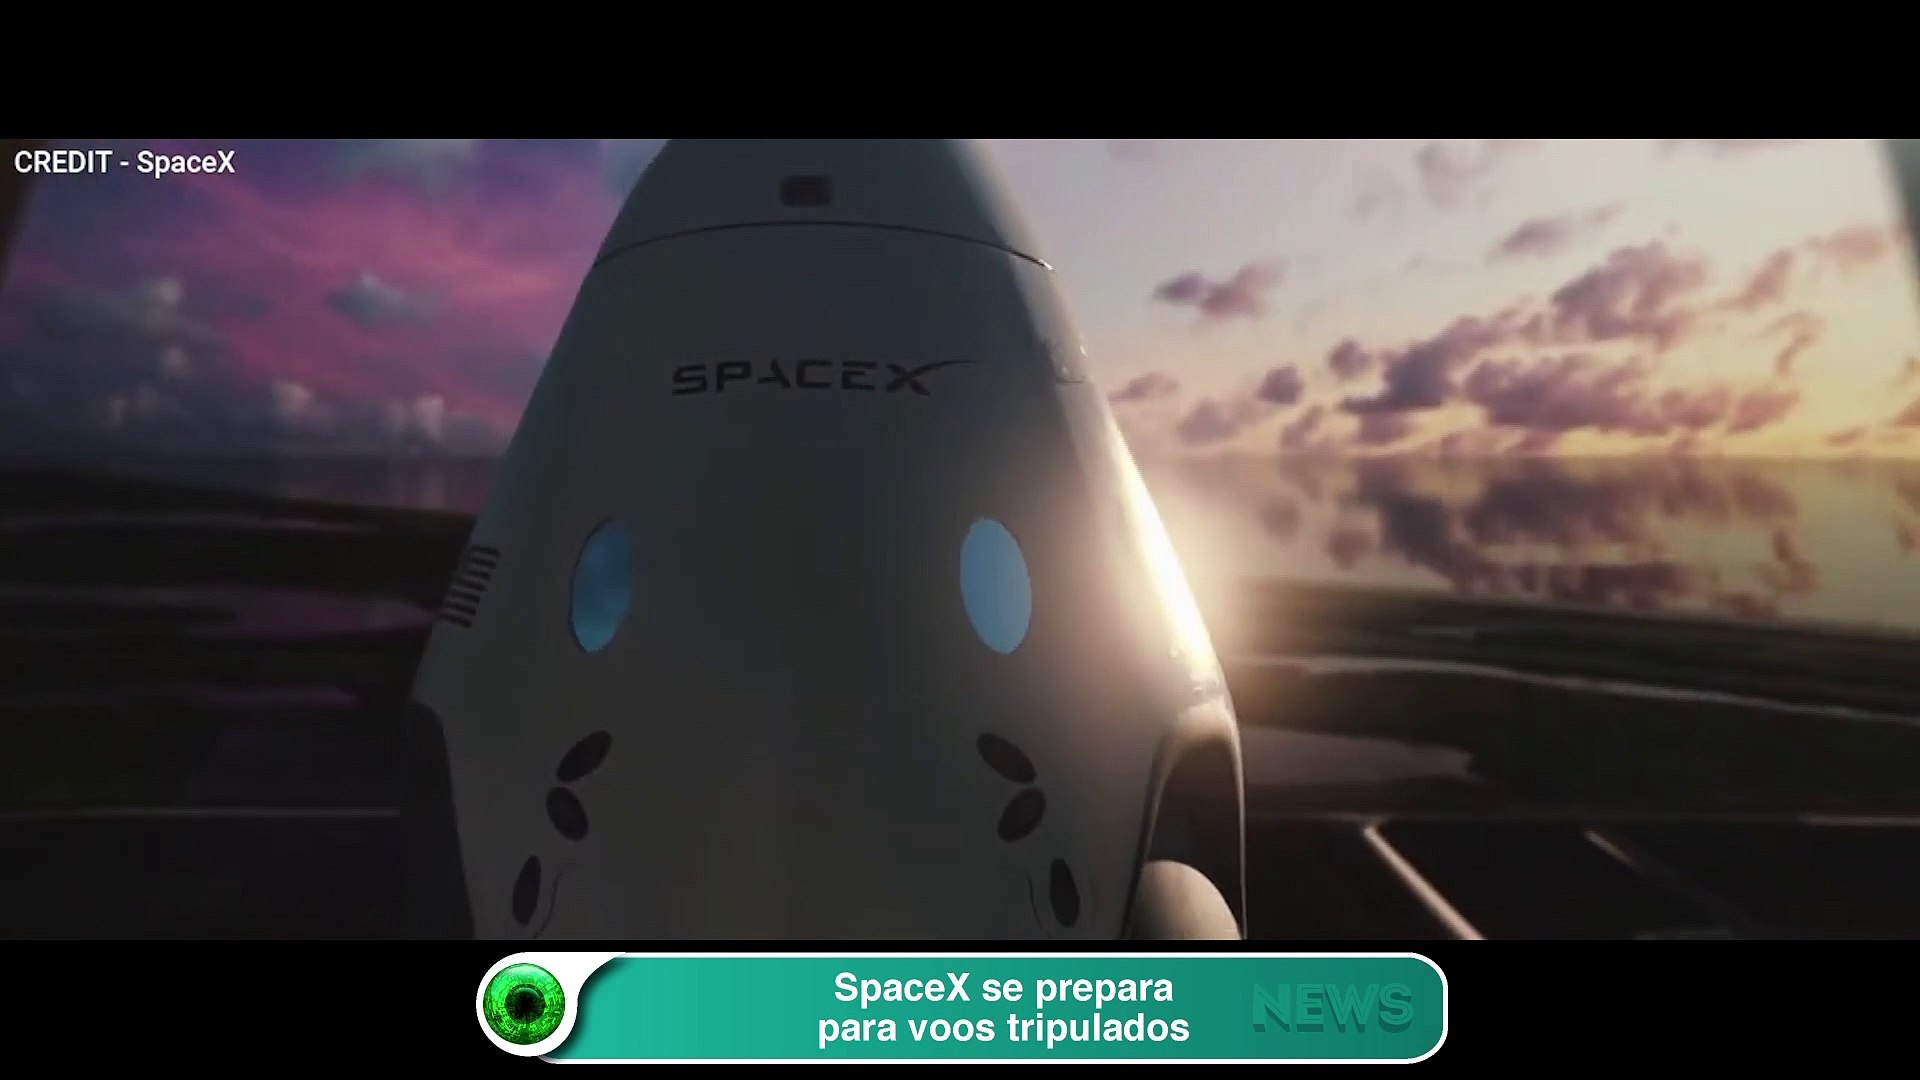 SpaceX se prepara para voos tripulados